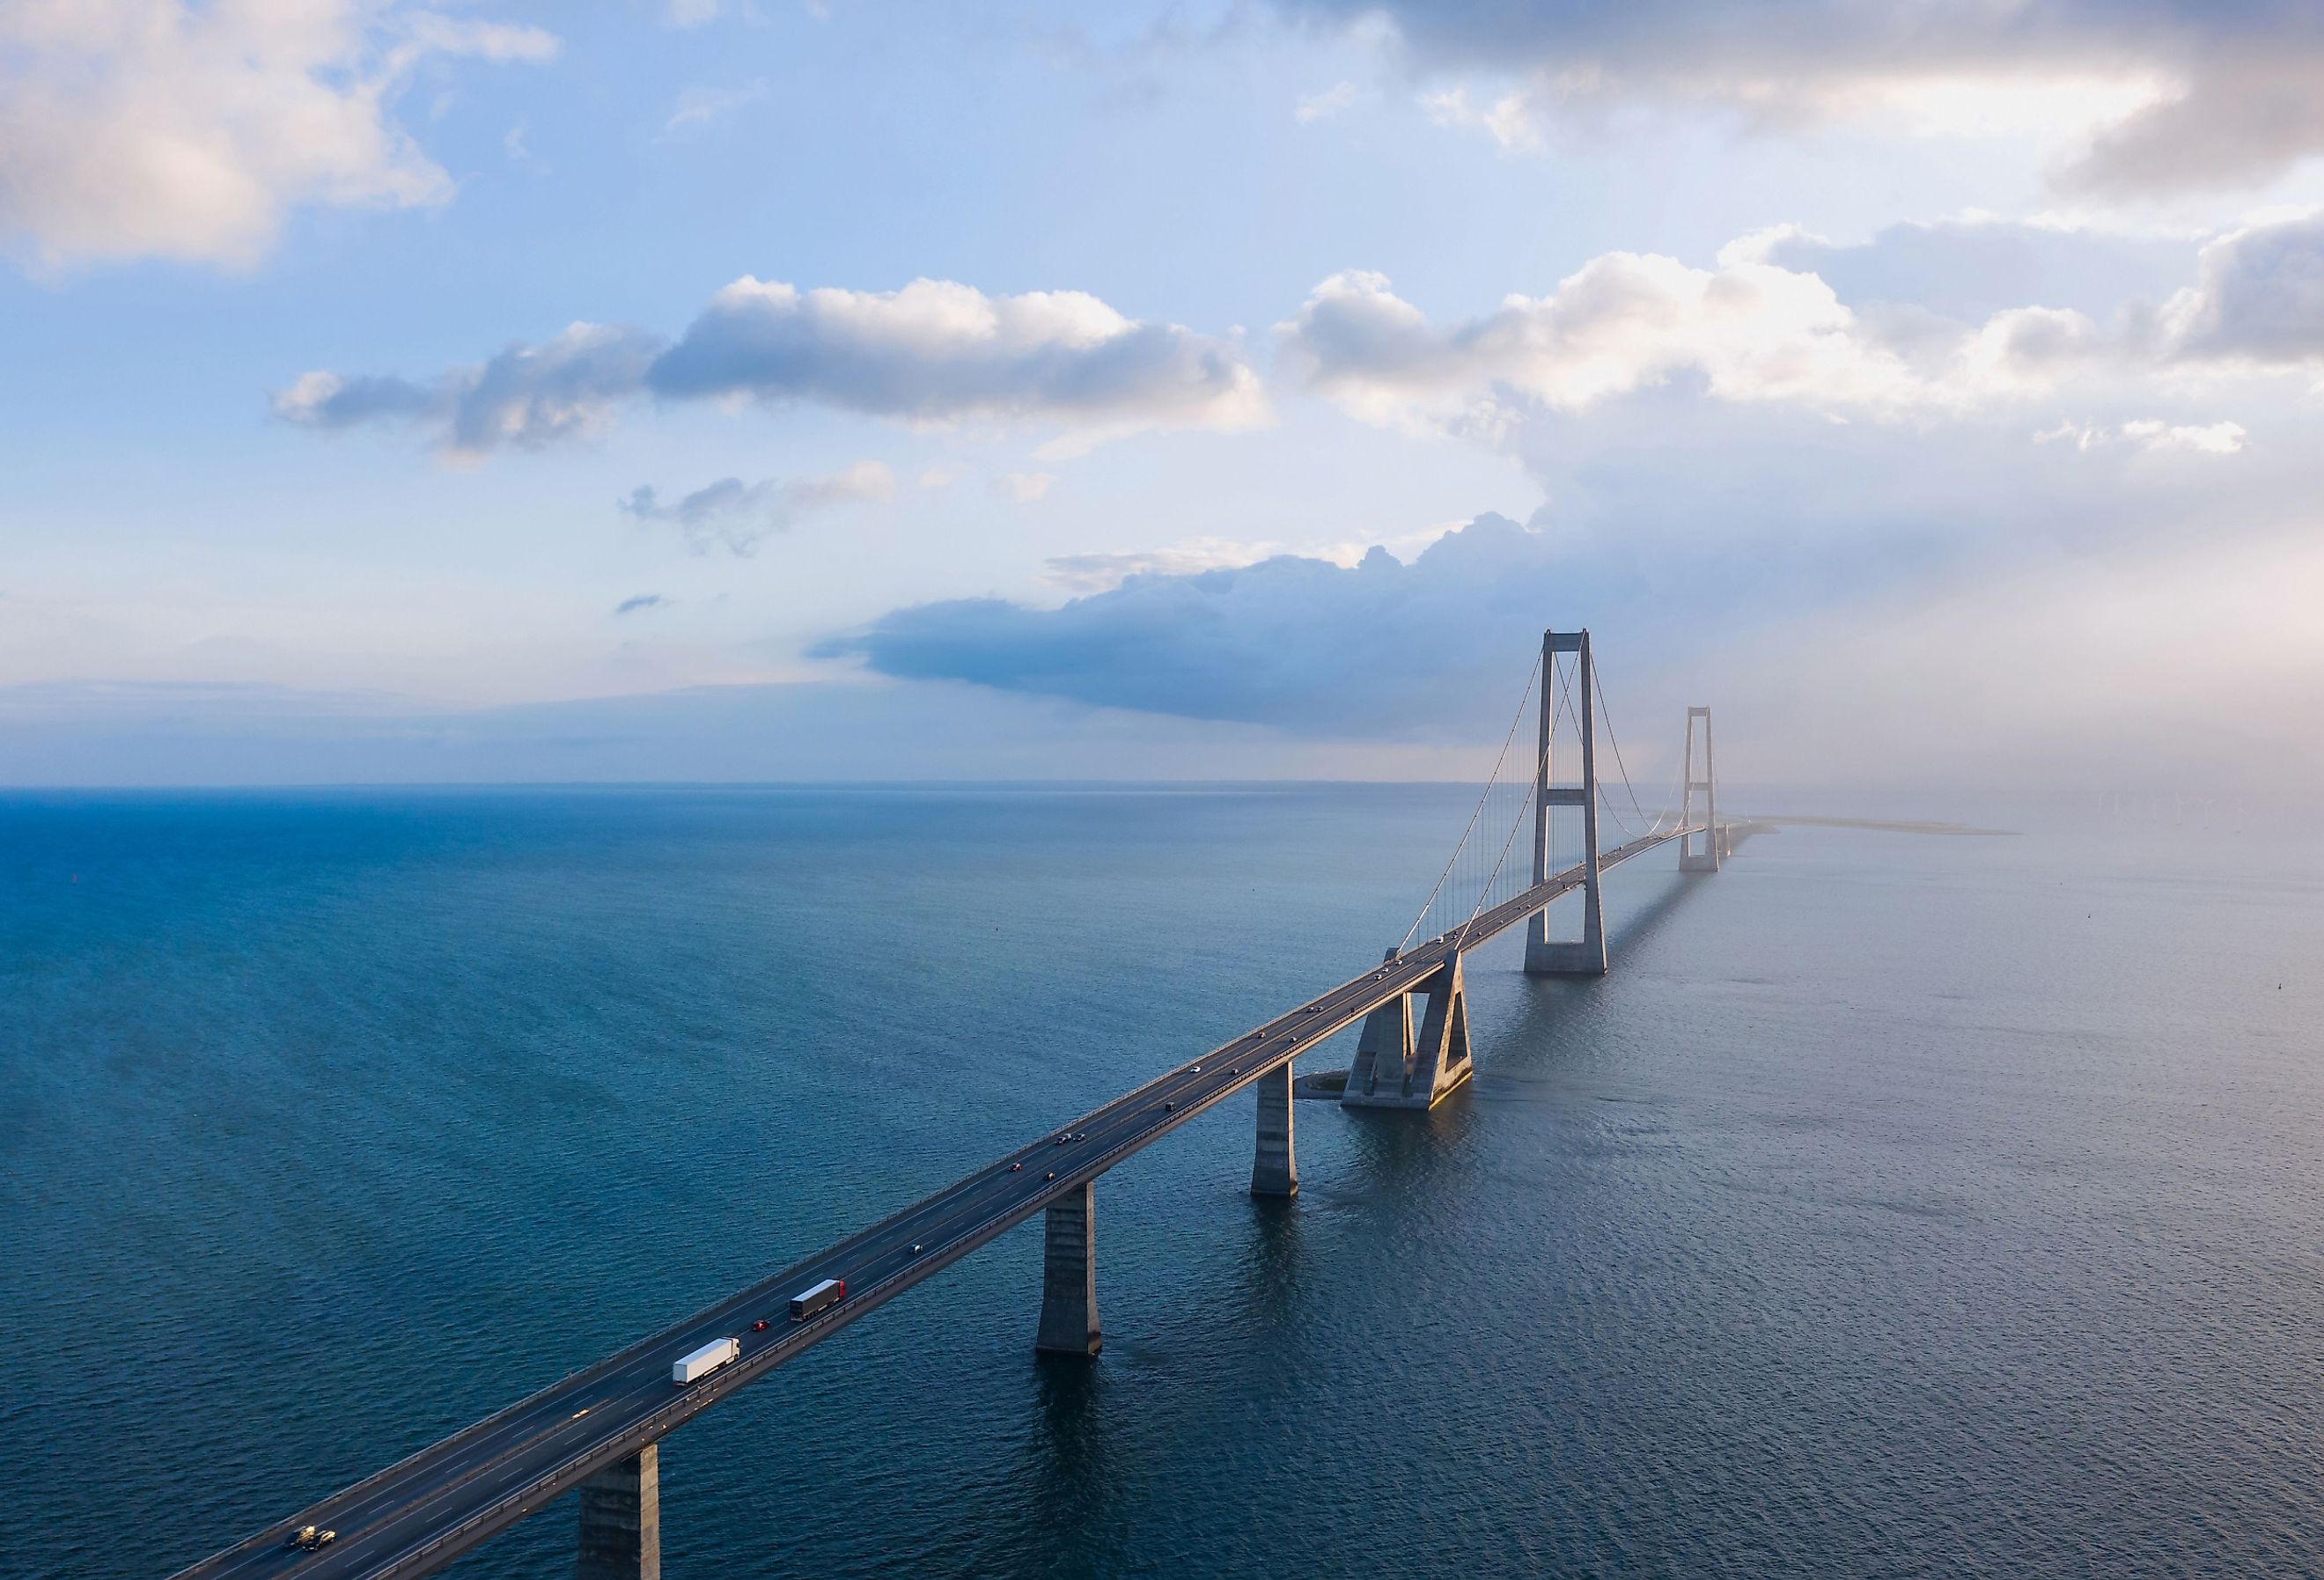 The famous Great Belt bridge (Østbroen) in Denmark, a multi-element fixed link crossing the Great Belt strait between the Danish islands of Zealand and Funen. Image credit uslatar via Shutterstock.